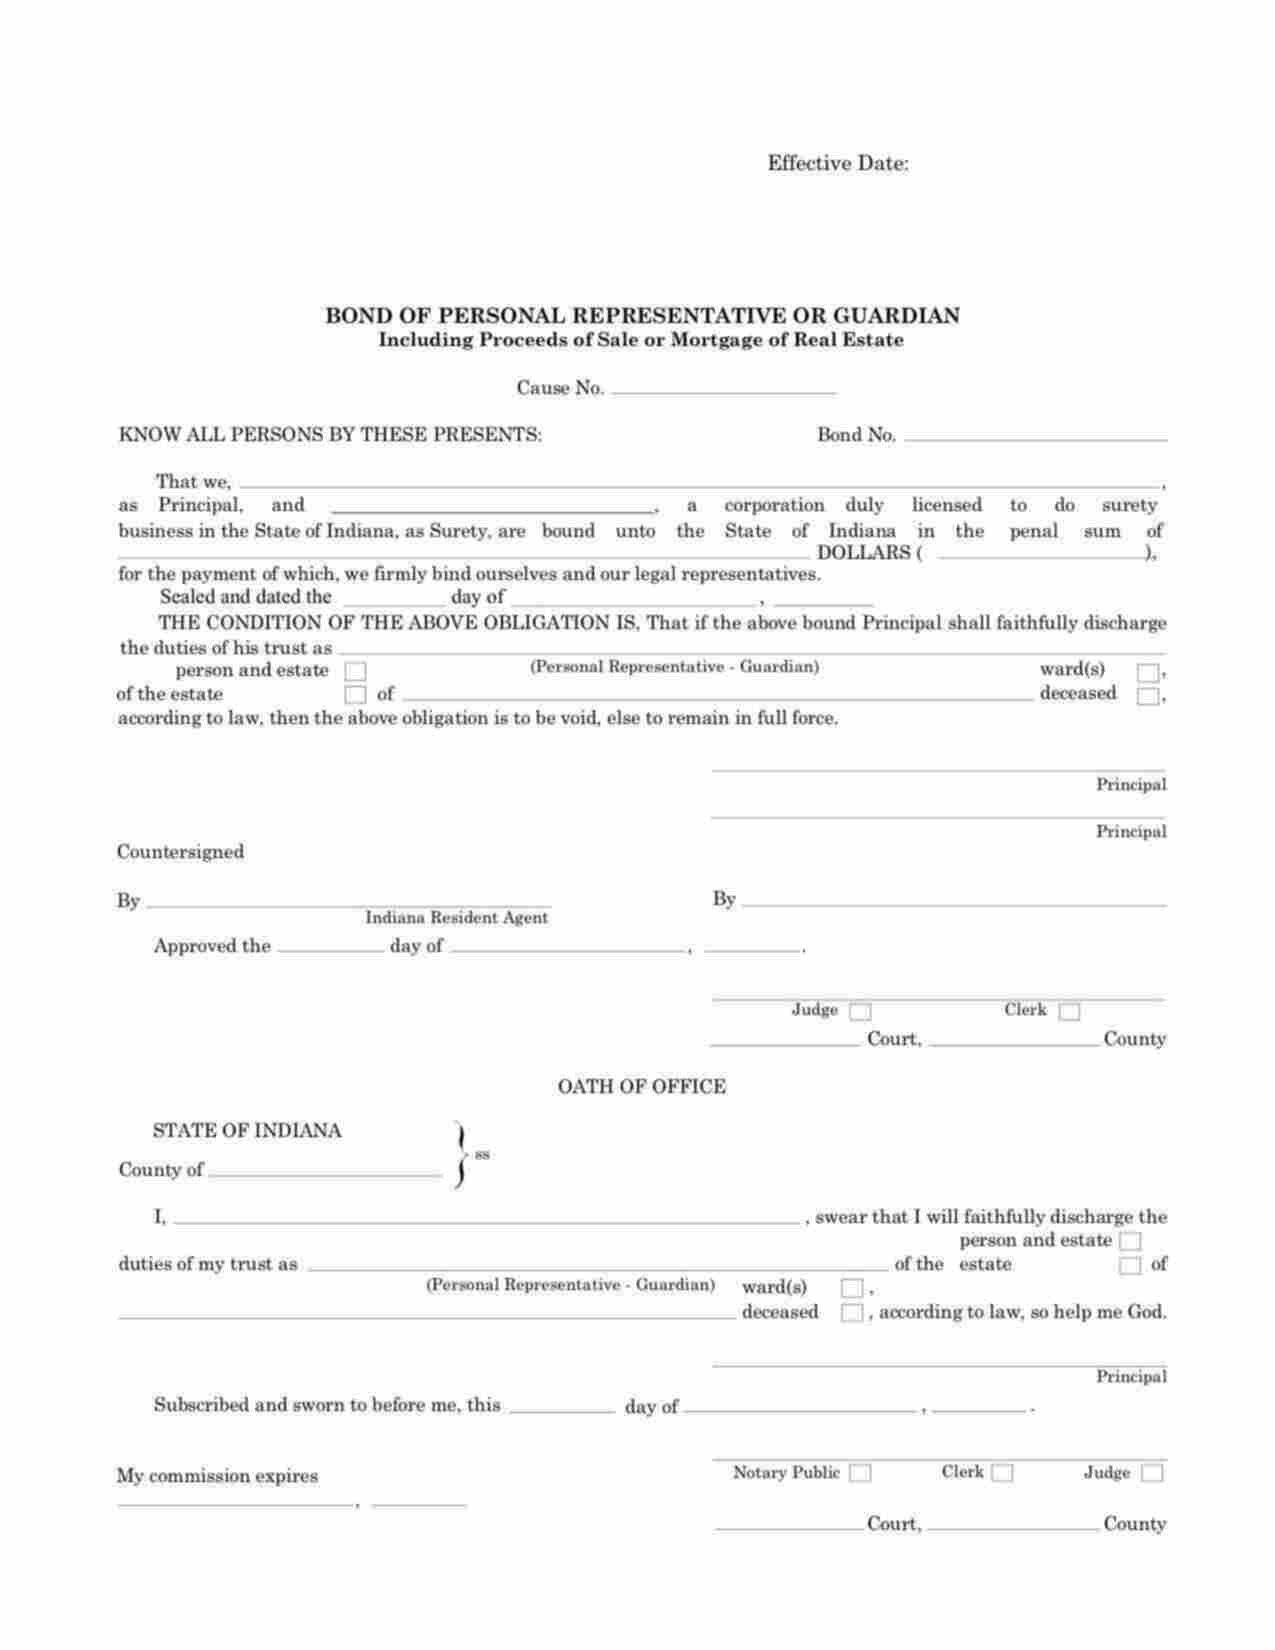 Indiana Probate Administrator, Executor, Conservator, or Guardian Bond Form